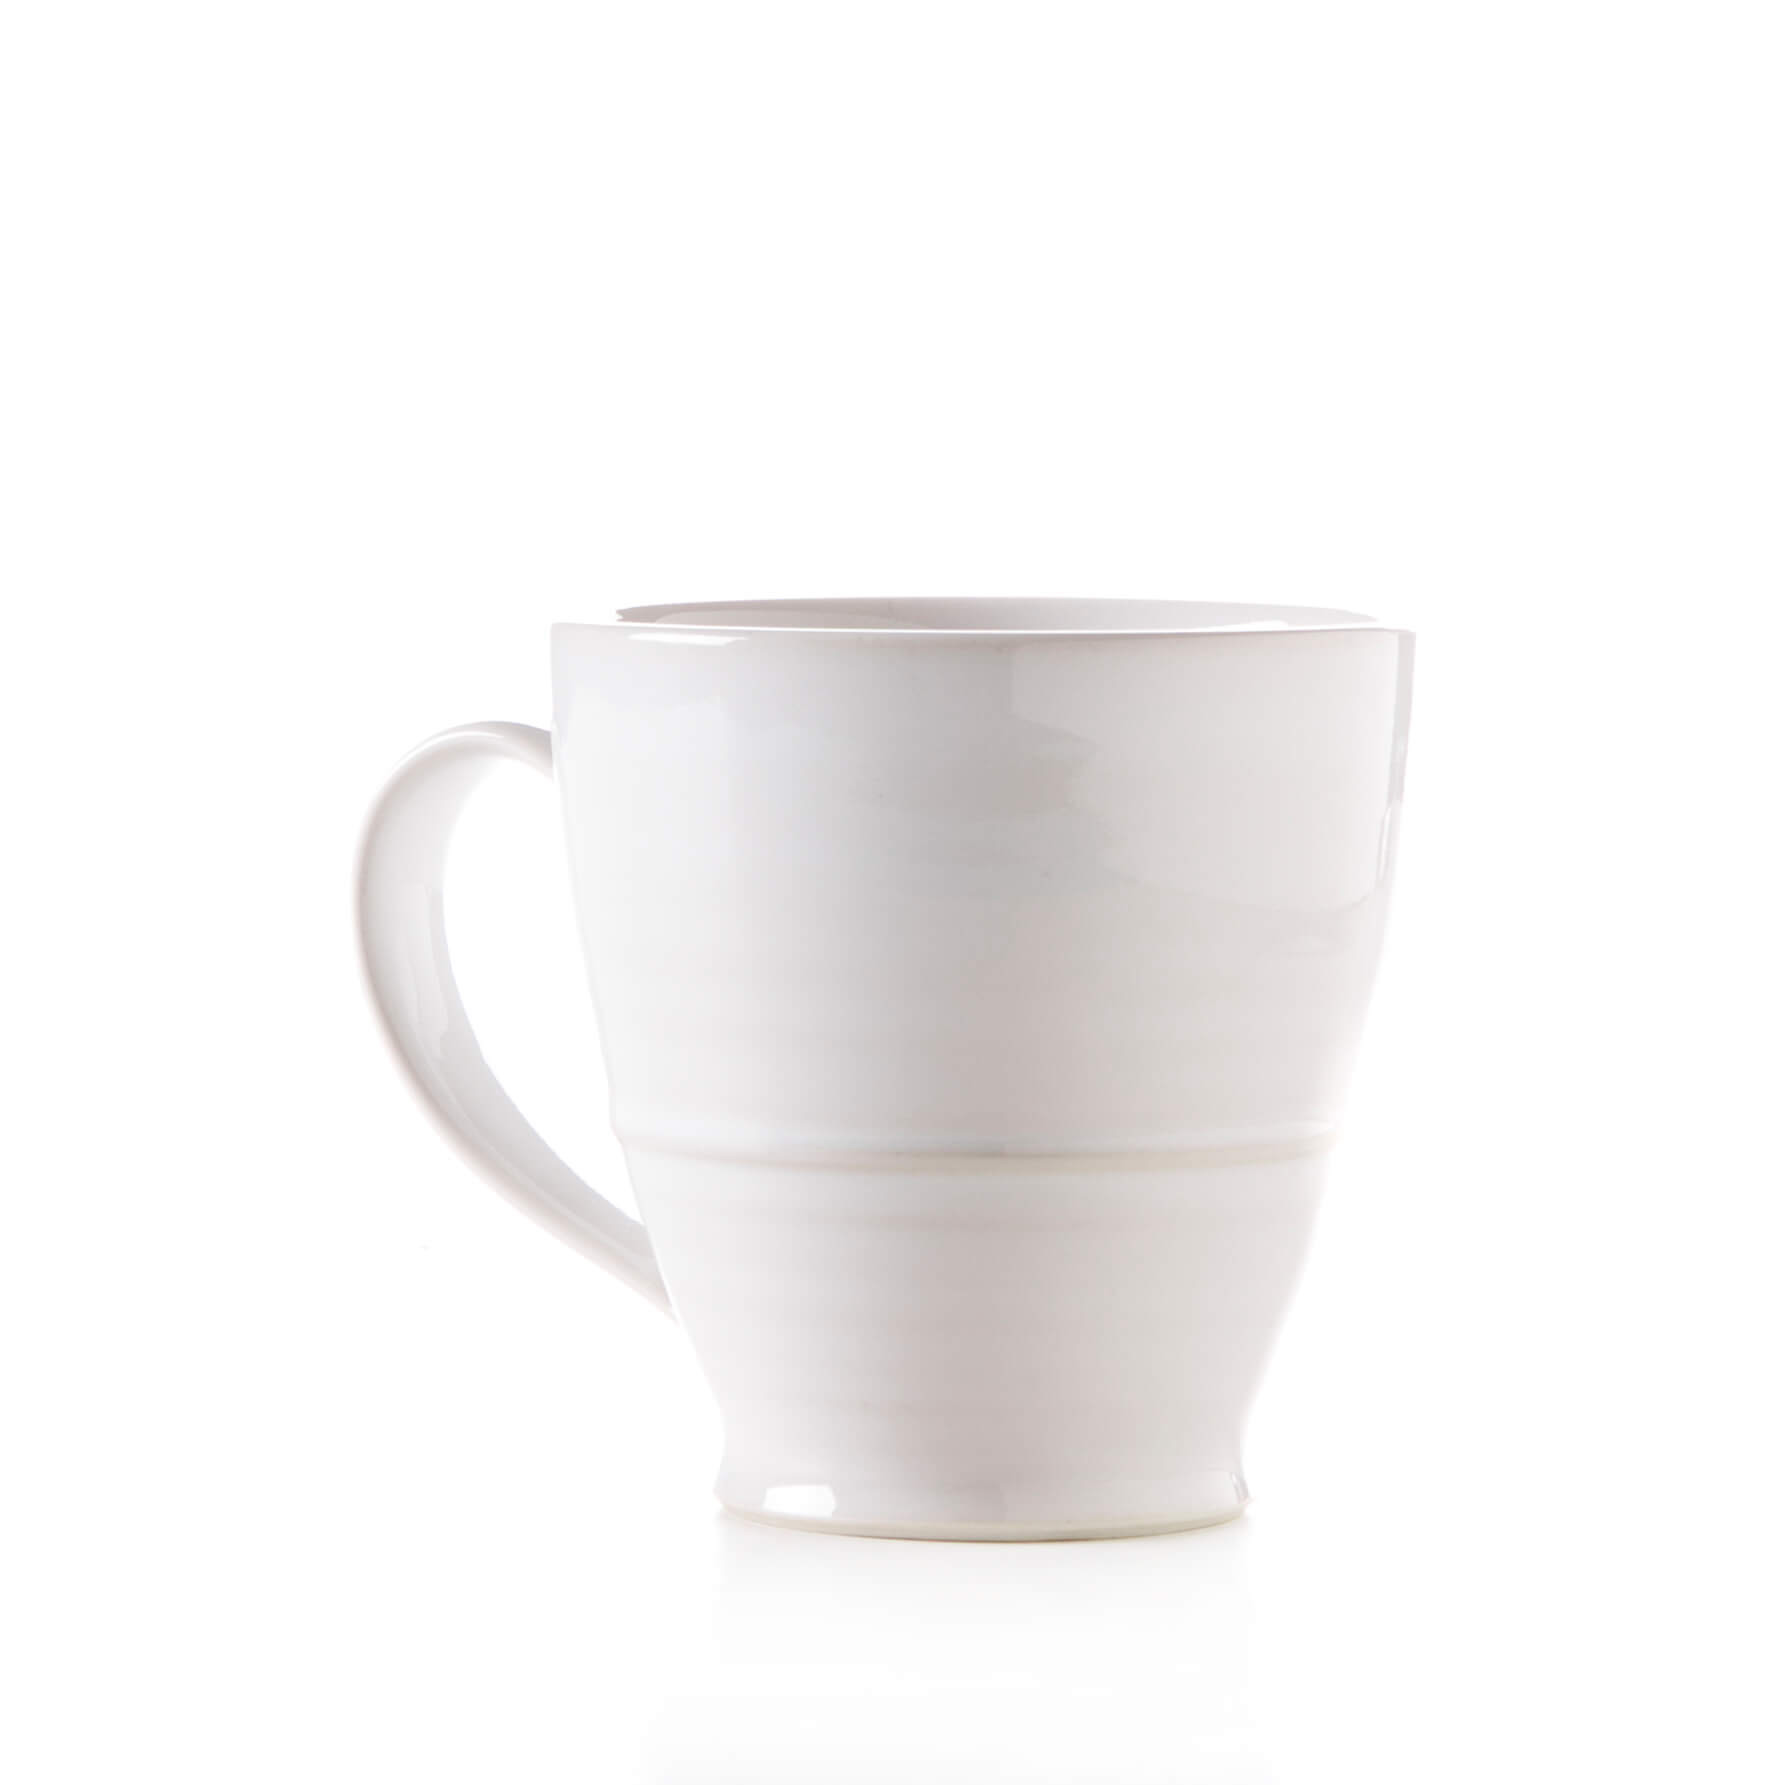 18 Lovely Simon Pearce Pottery Vase 2024 free download simon pearce pottery vase of cavendish mug dove intended for 1790dove cavendish